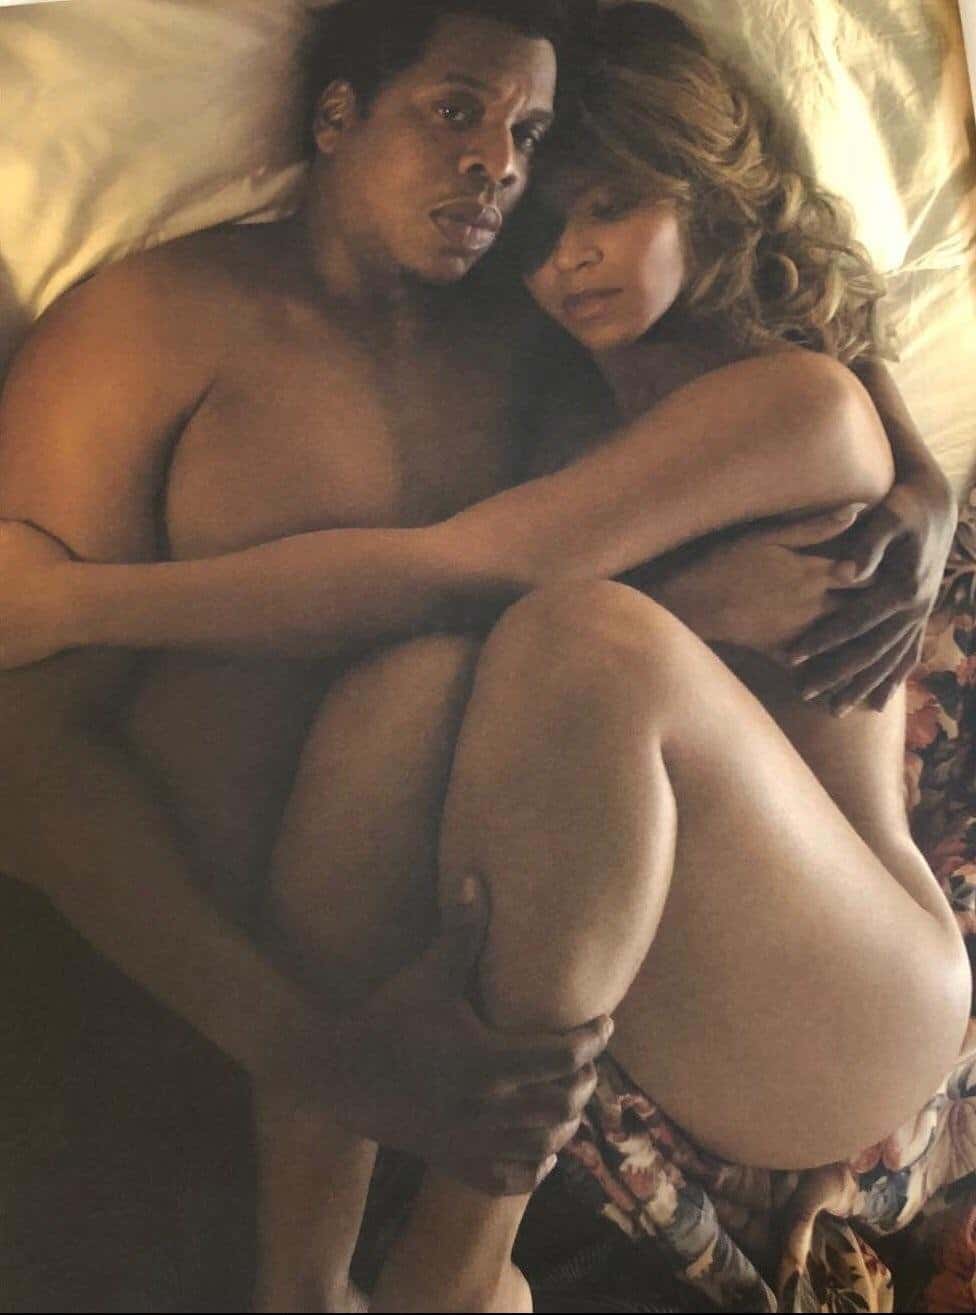 Beyonce real naked photos